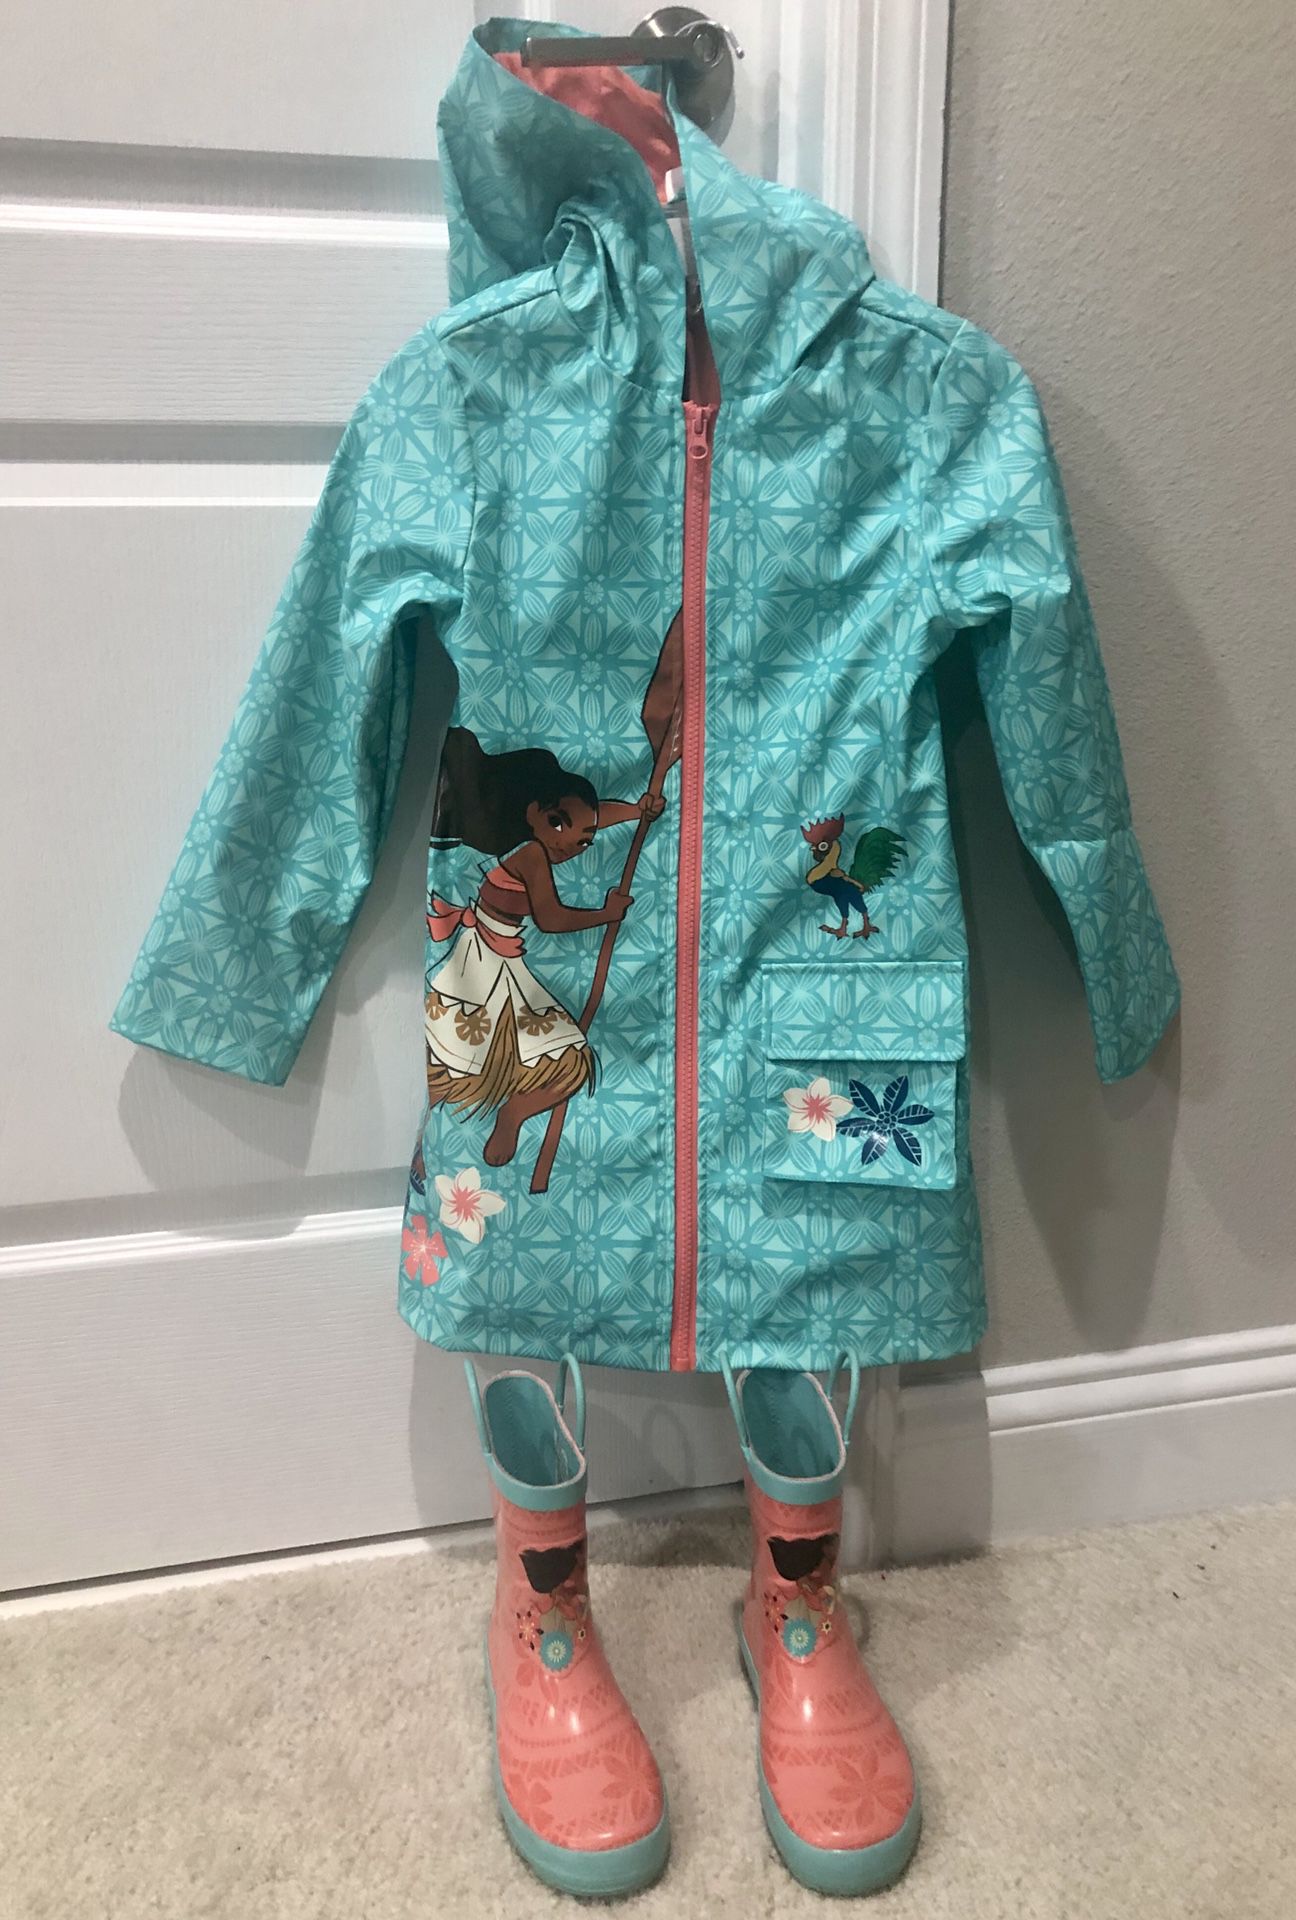 Disney Moana raincoat and rain boots set